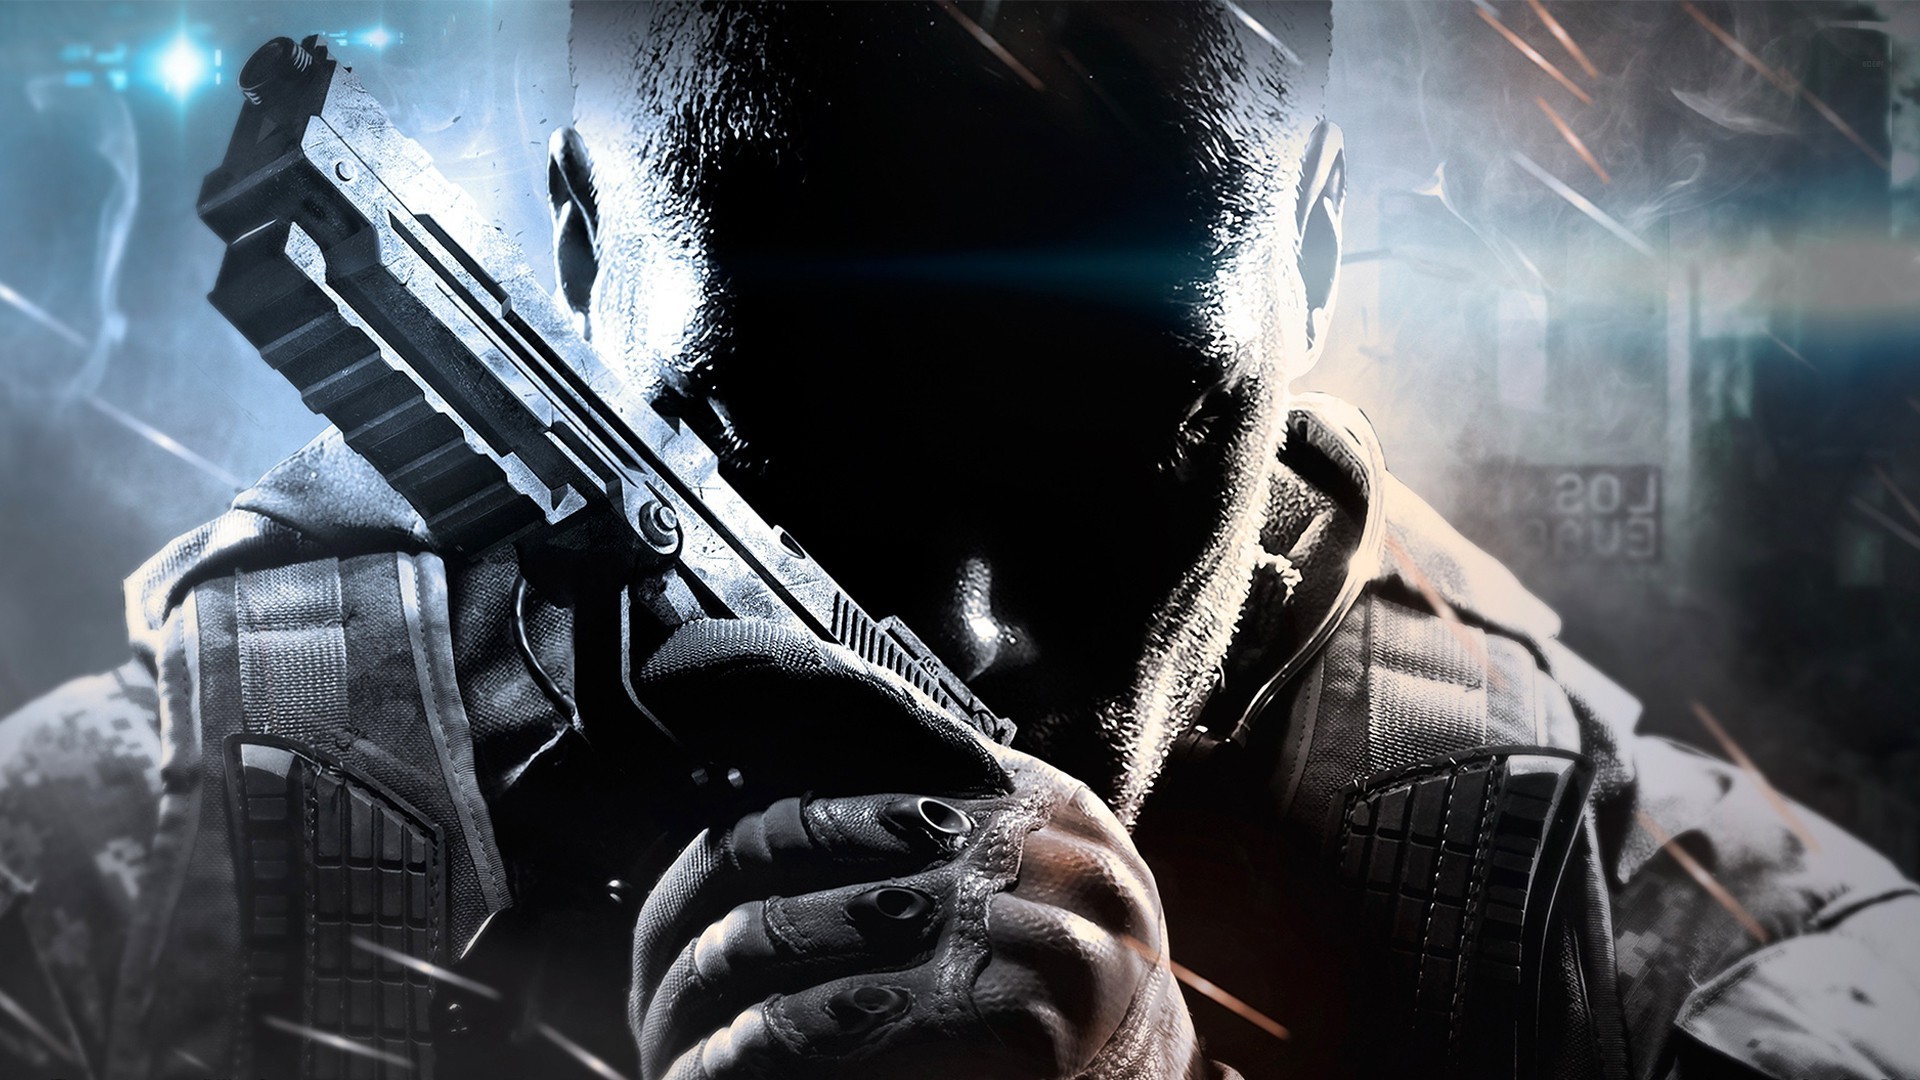 Call of Duty Black Ops III 4K wallpaper download